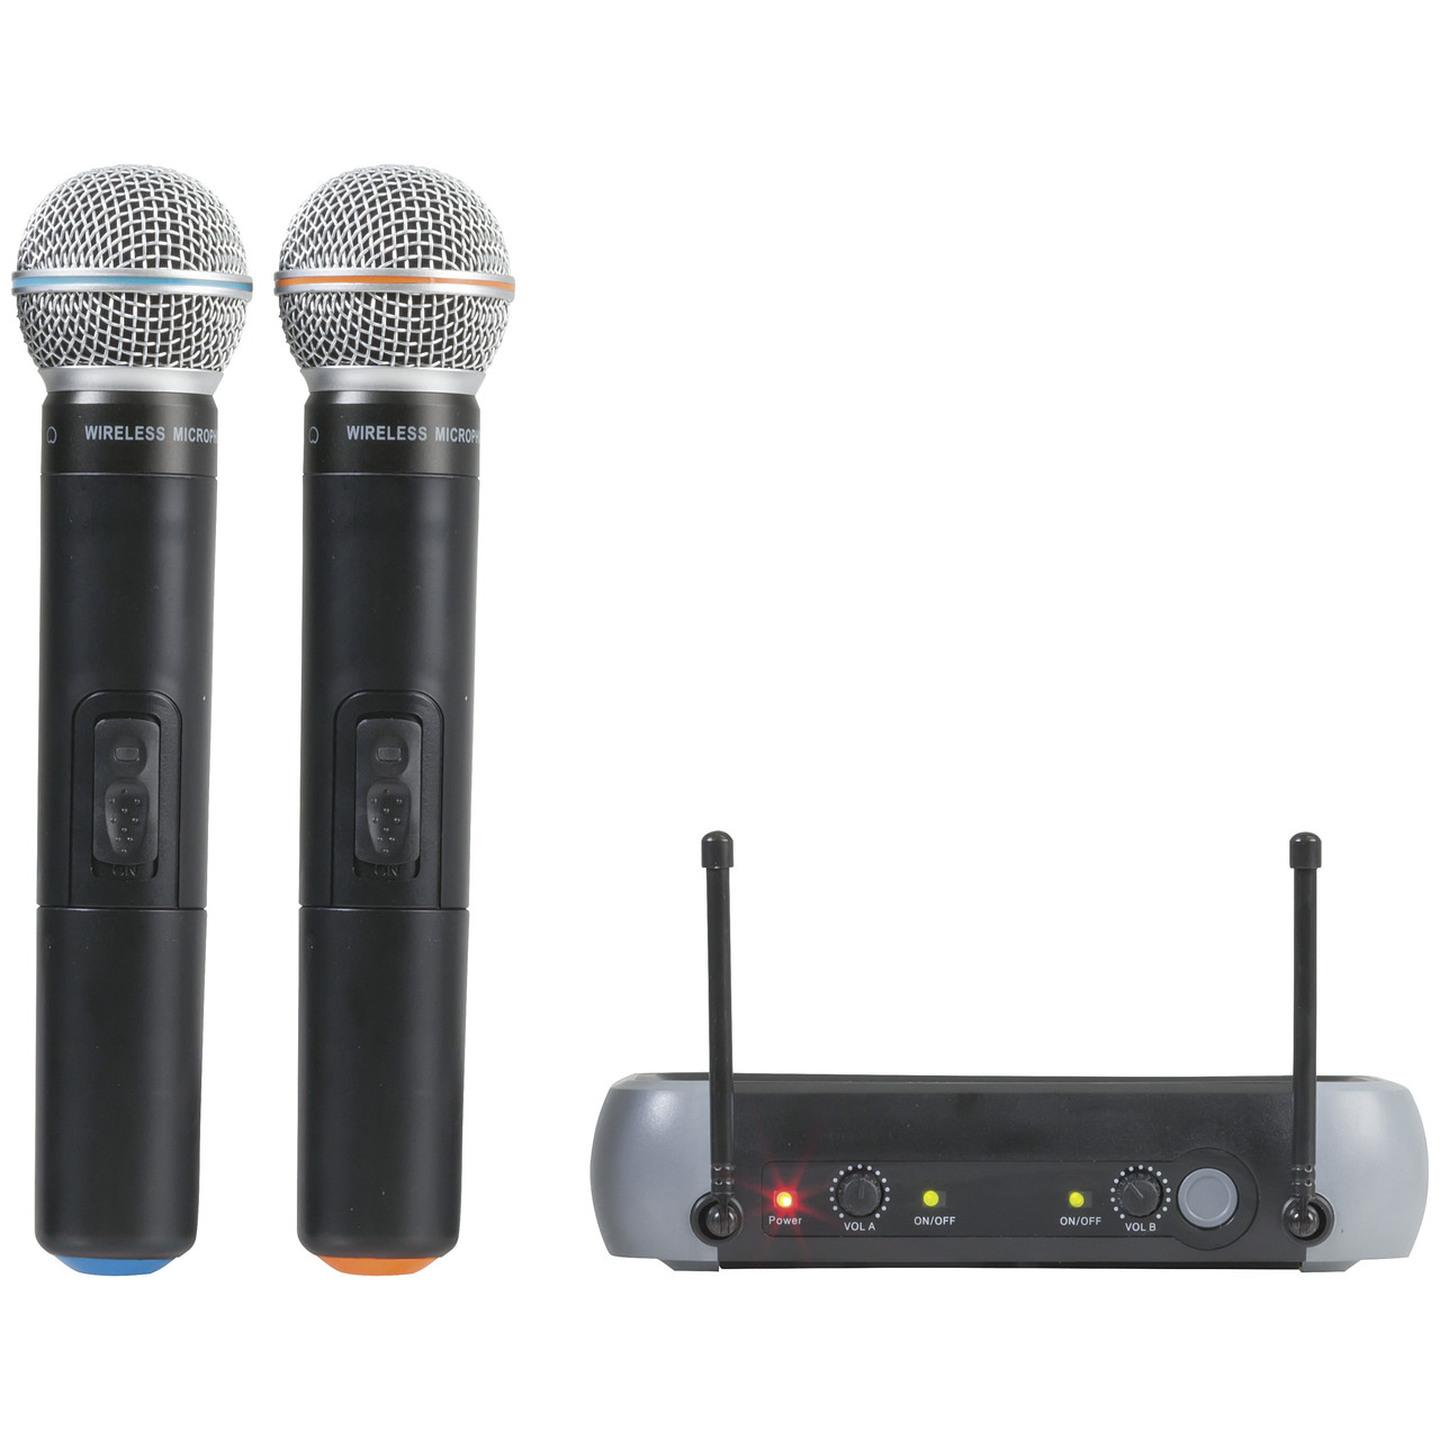 Digitech Dual Wireless UHF Microphone System